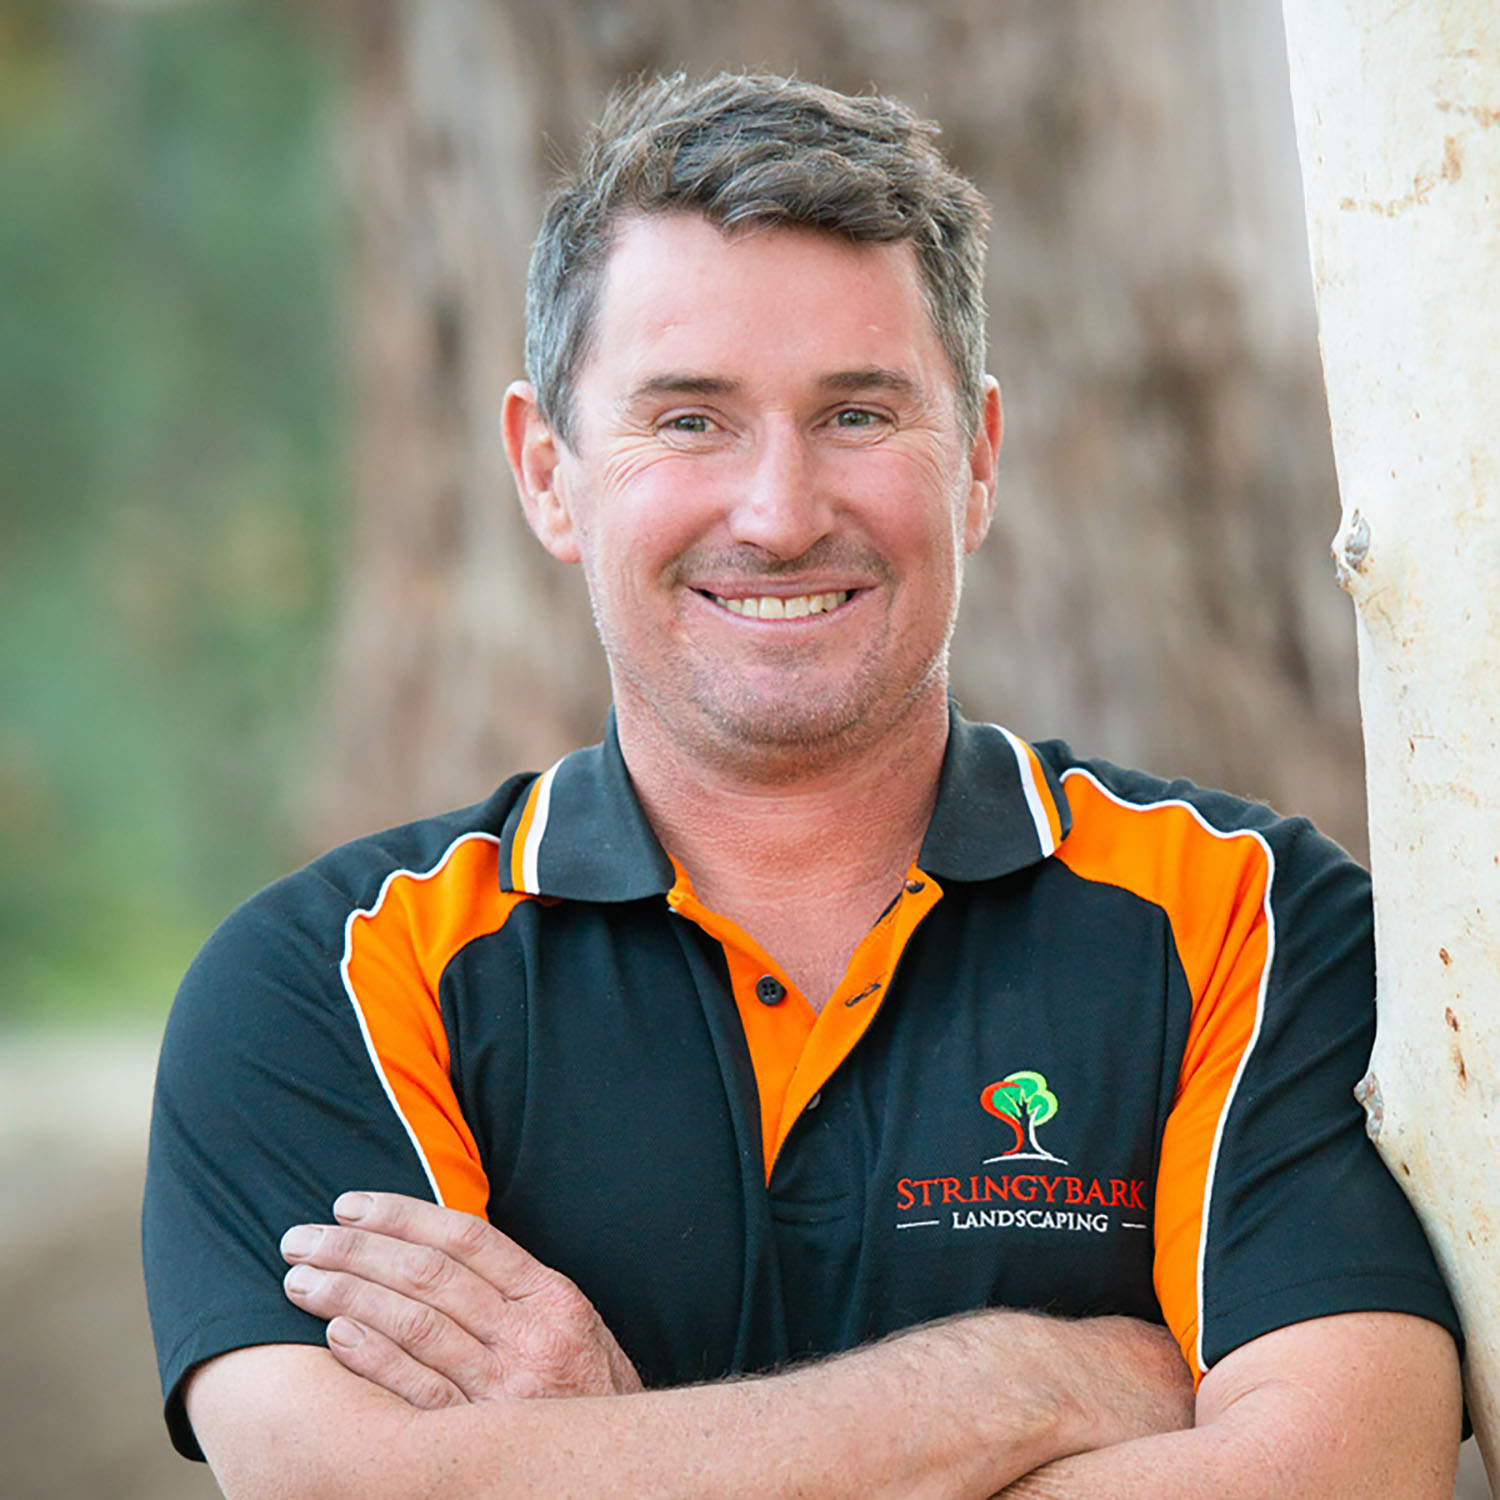 Matt Thomas - Founder & Director | Stringybark Landscaping | Adelaide Hills & Metropolitan Landscaping Services